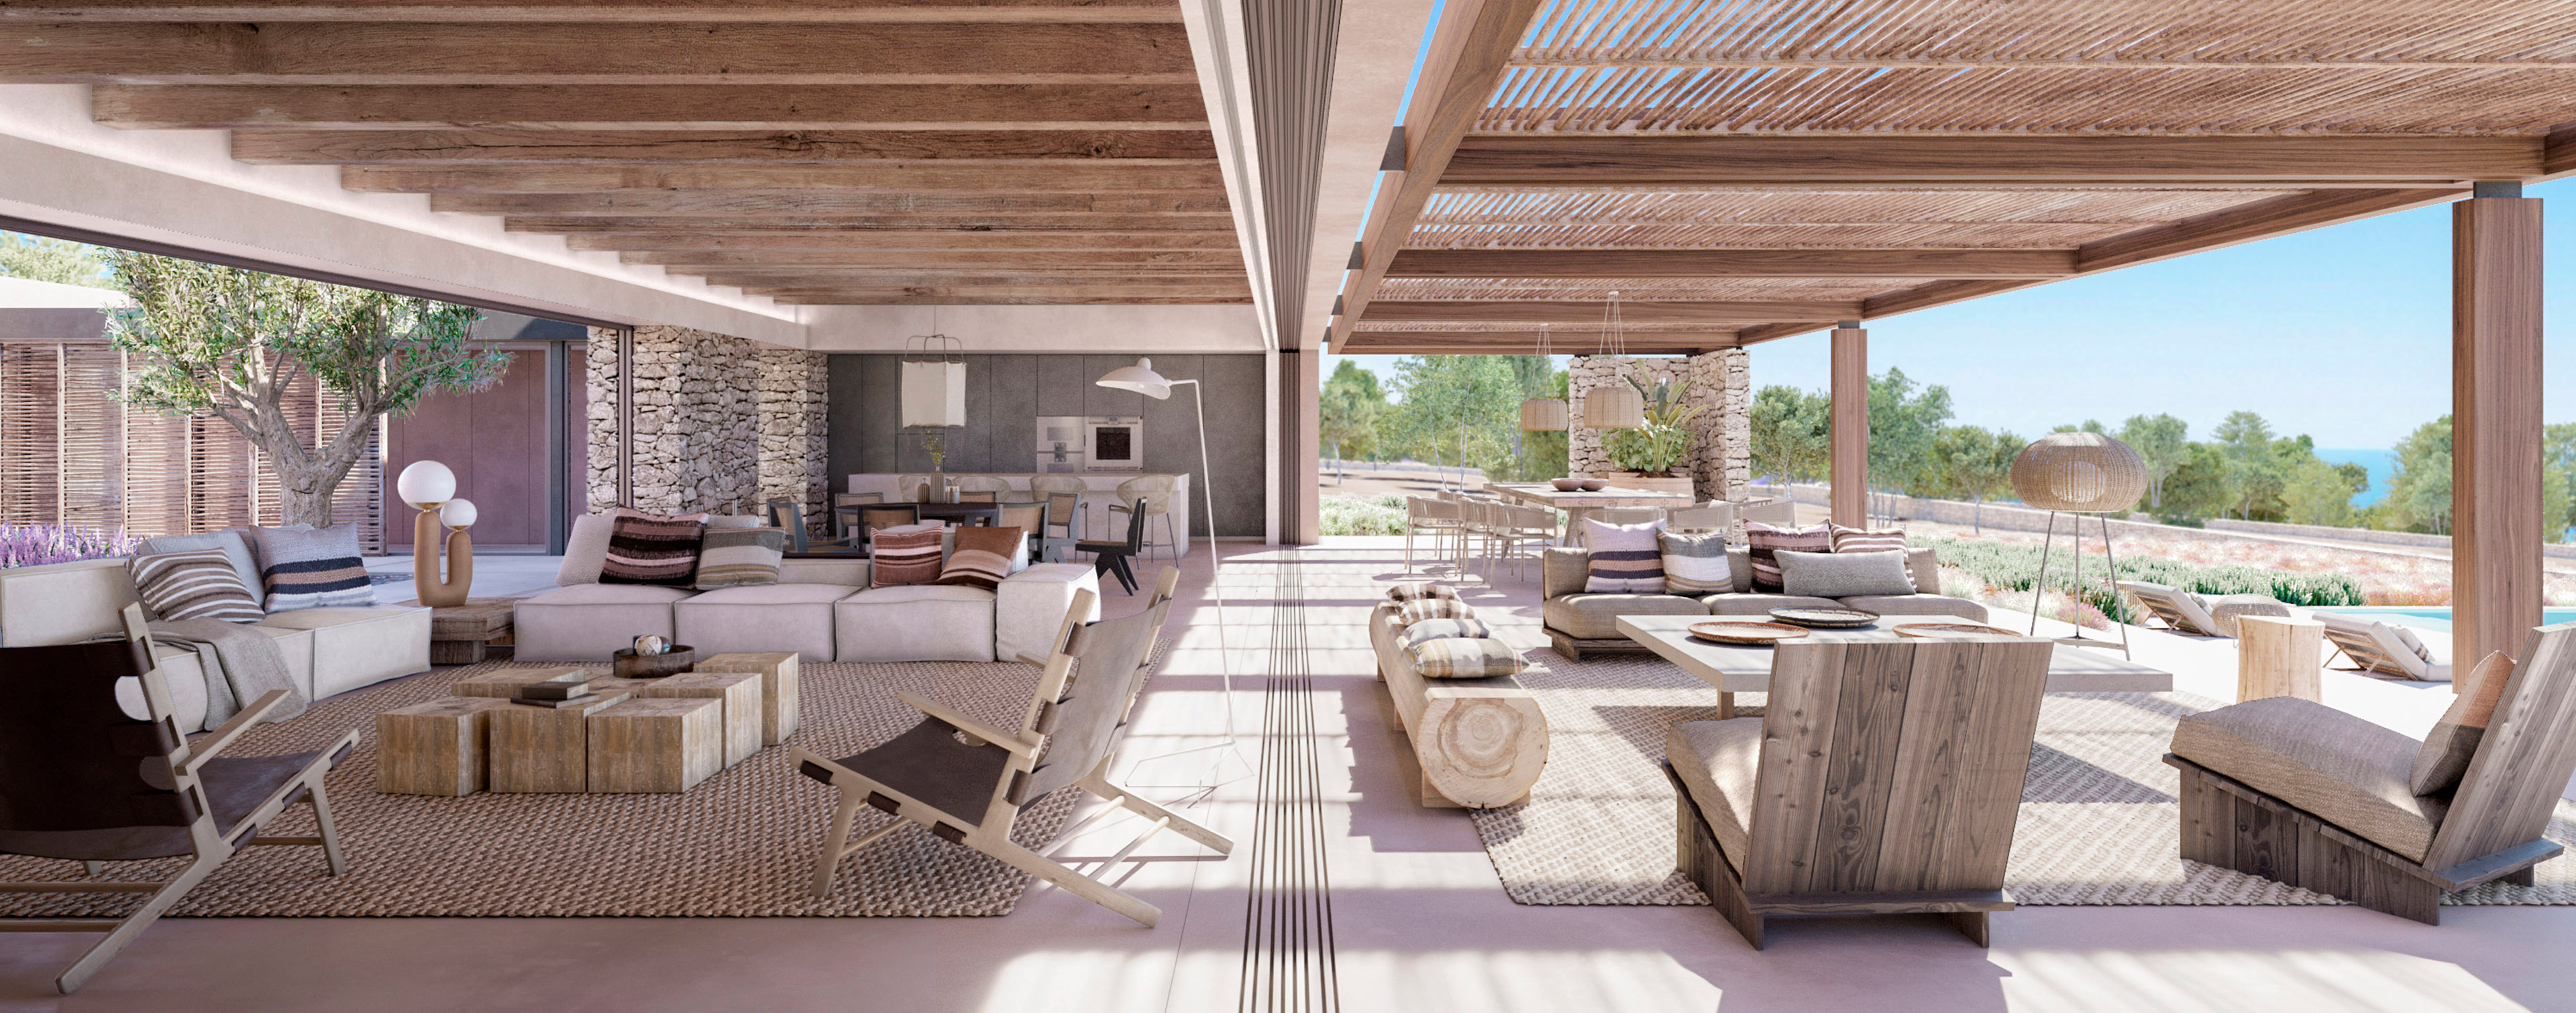 luv studio luxury architects ibiza santa eulalia villa IMG 01 - Ibiza Villa